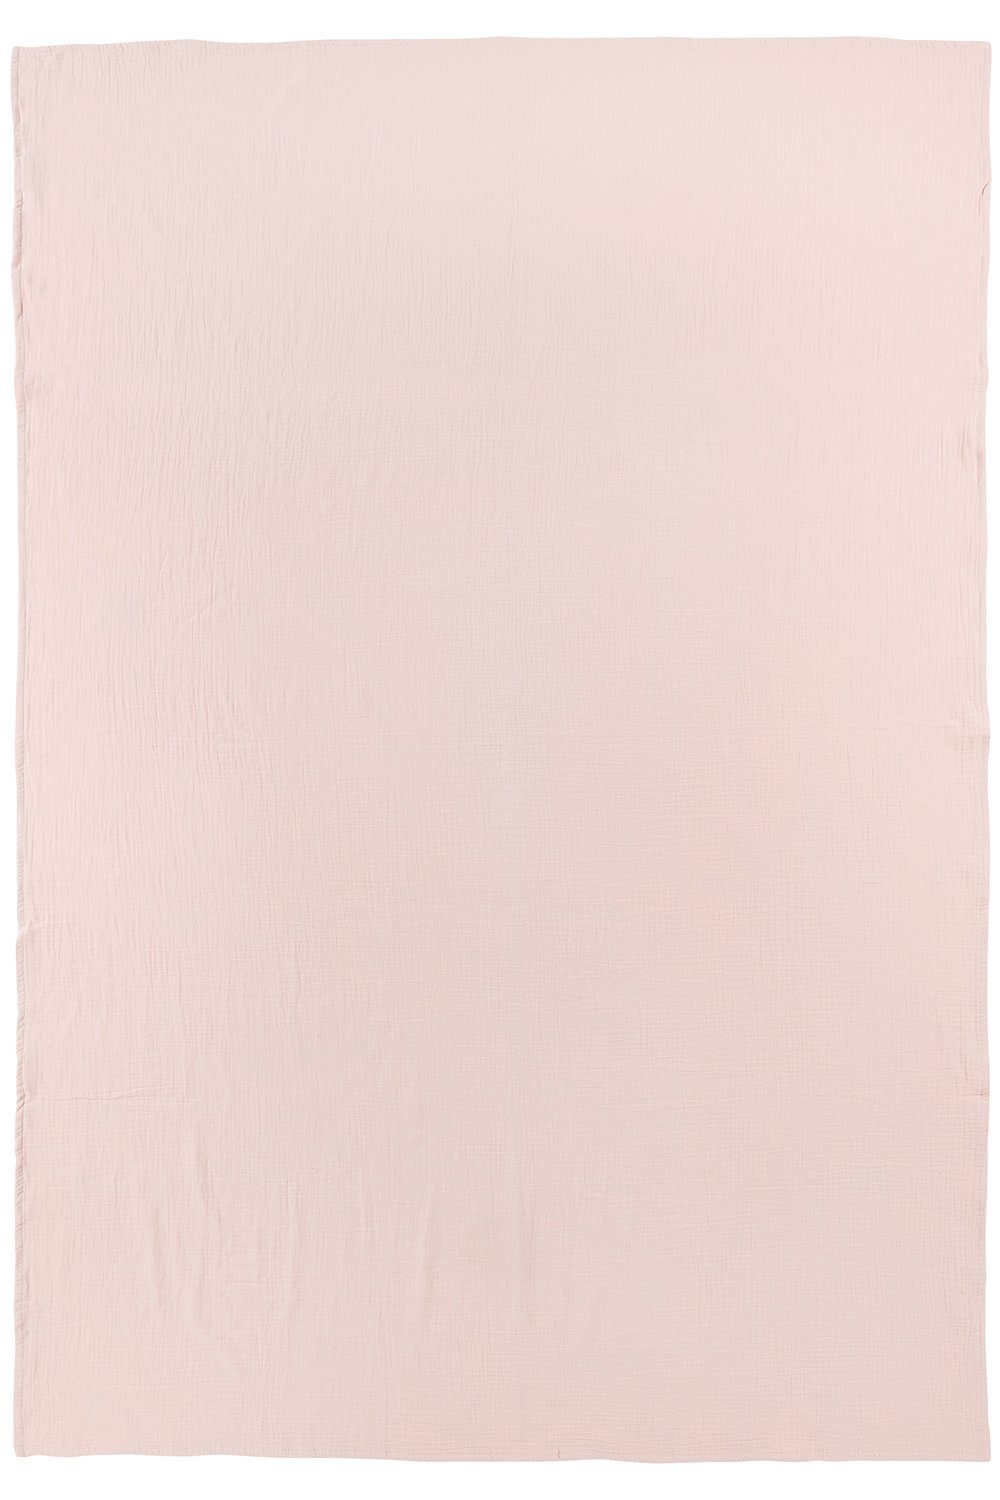 Pink, Soft Babydecke Uni Meyco Home, 140x200cm